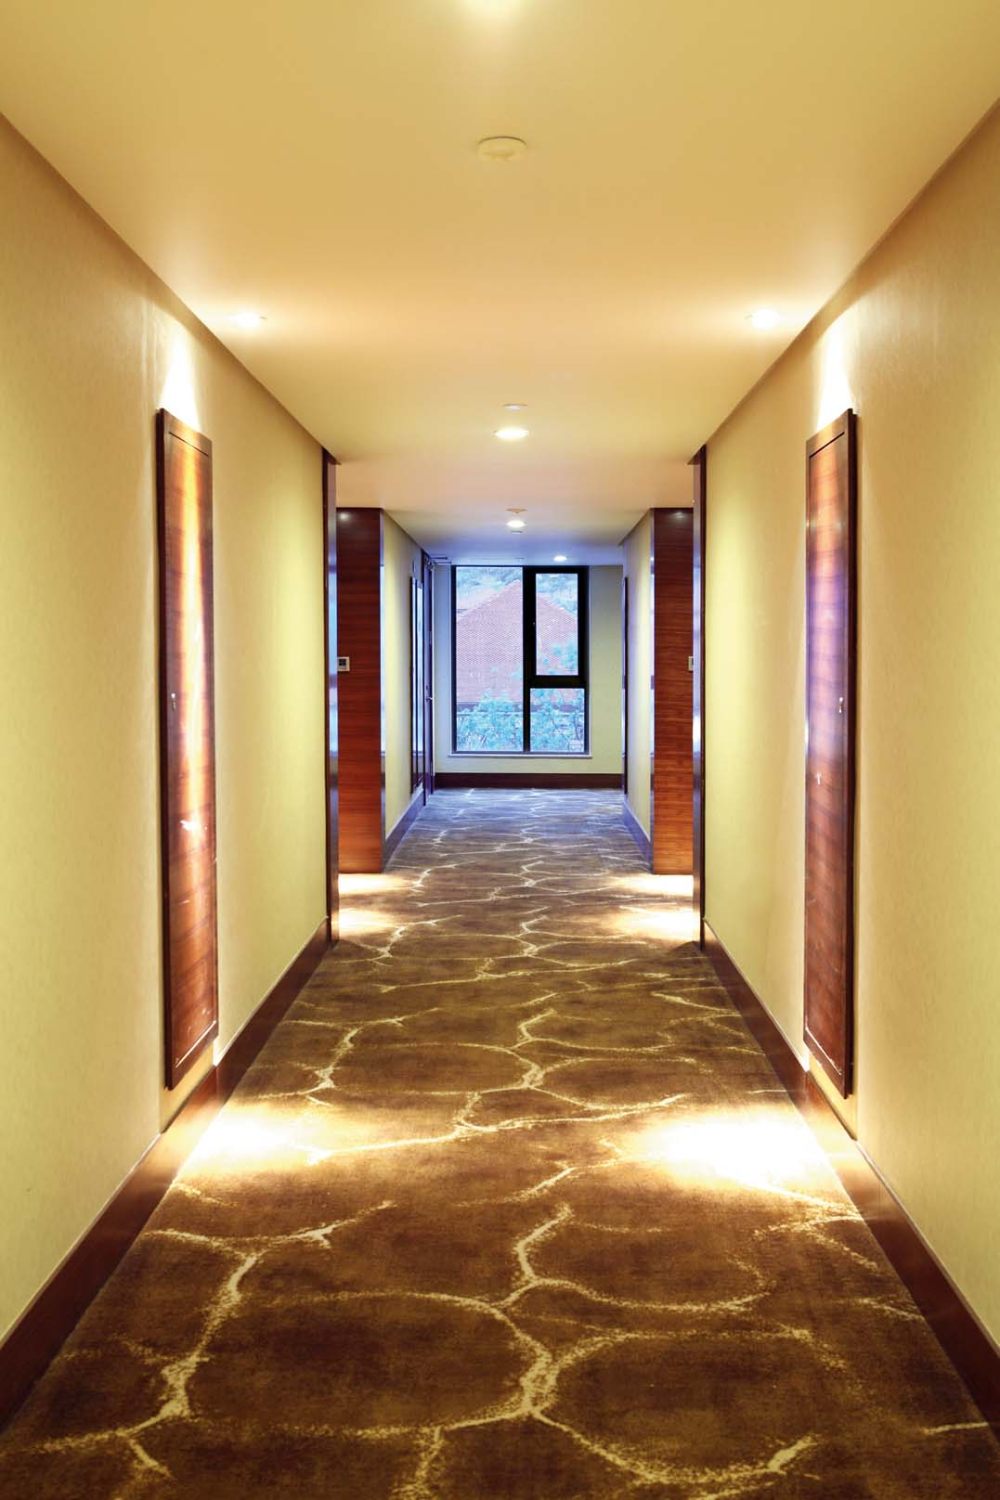 无锡逸林希尔顿酒店 Wuxi Double Tree Hotel_Wu Xi Doubletrees Hilton Corridor.jpg